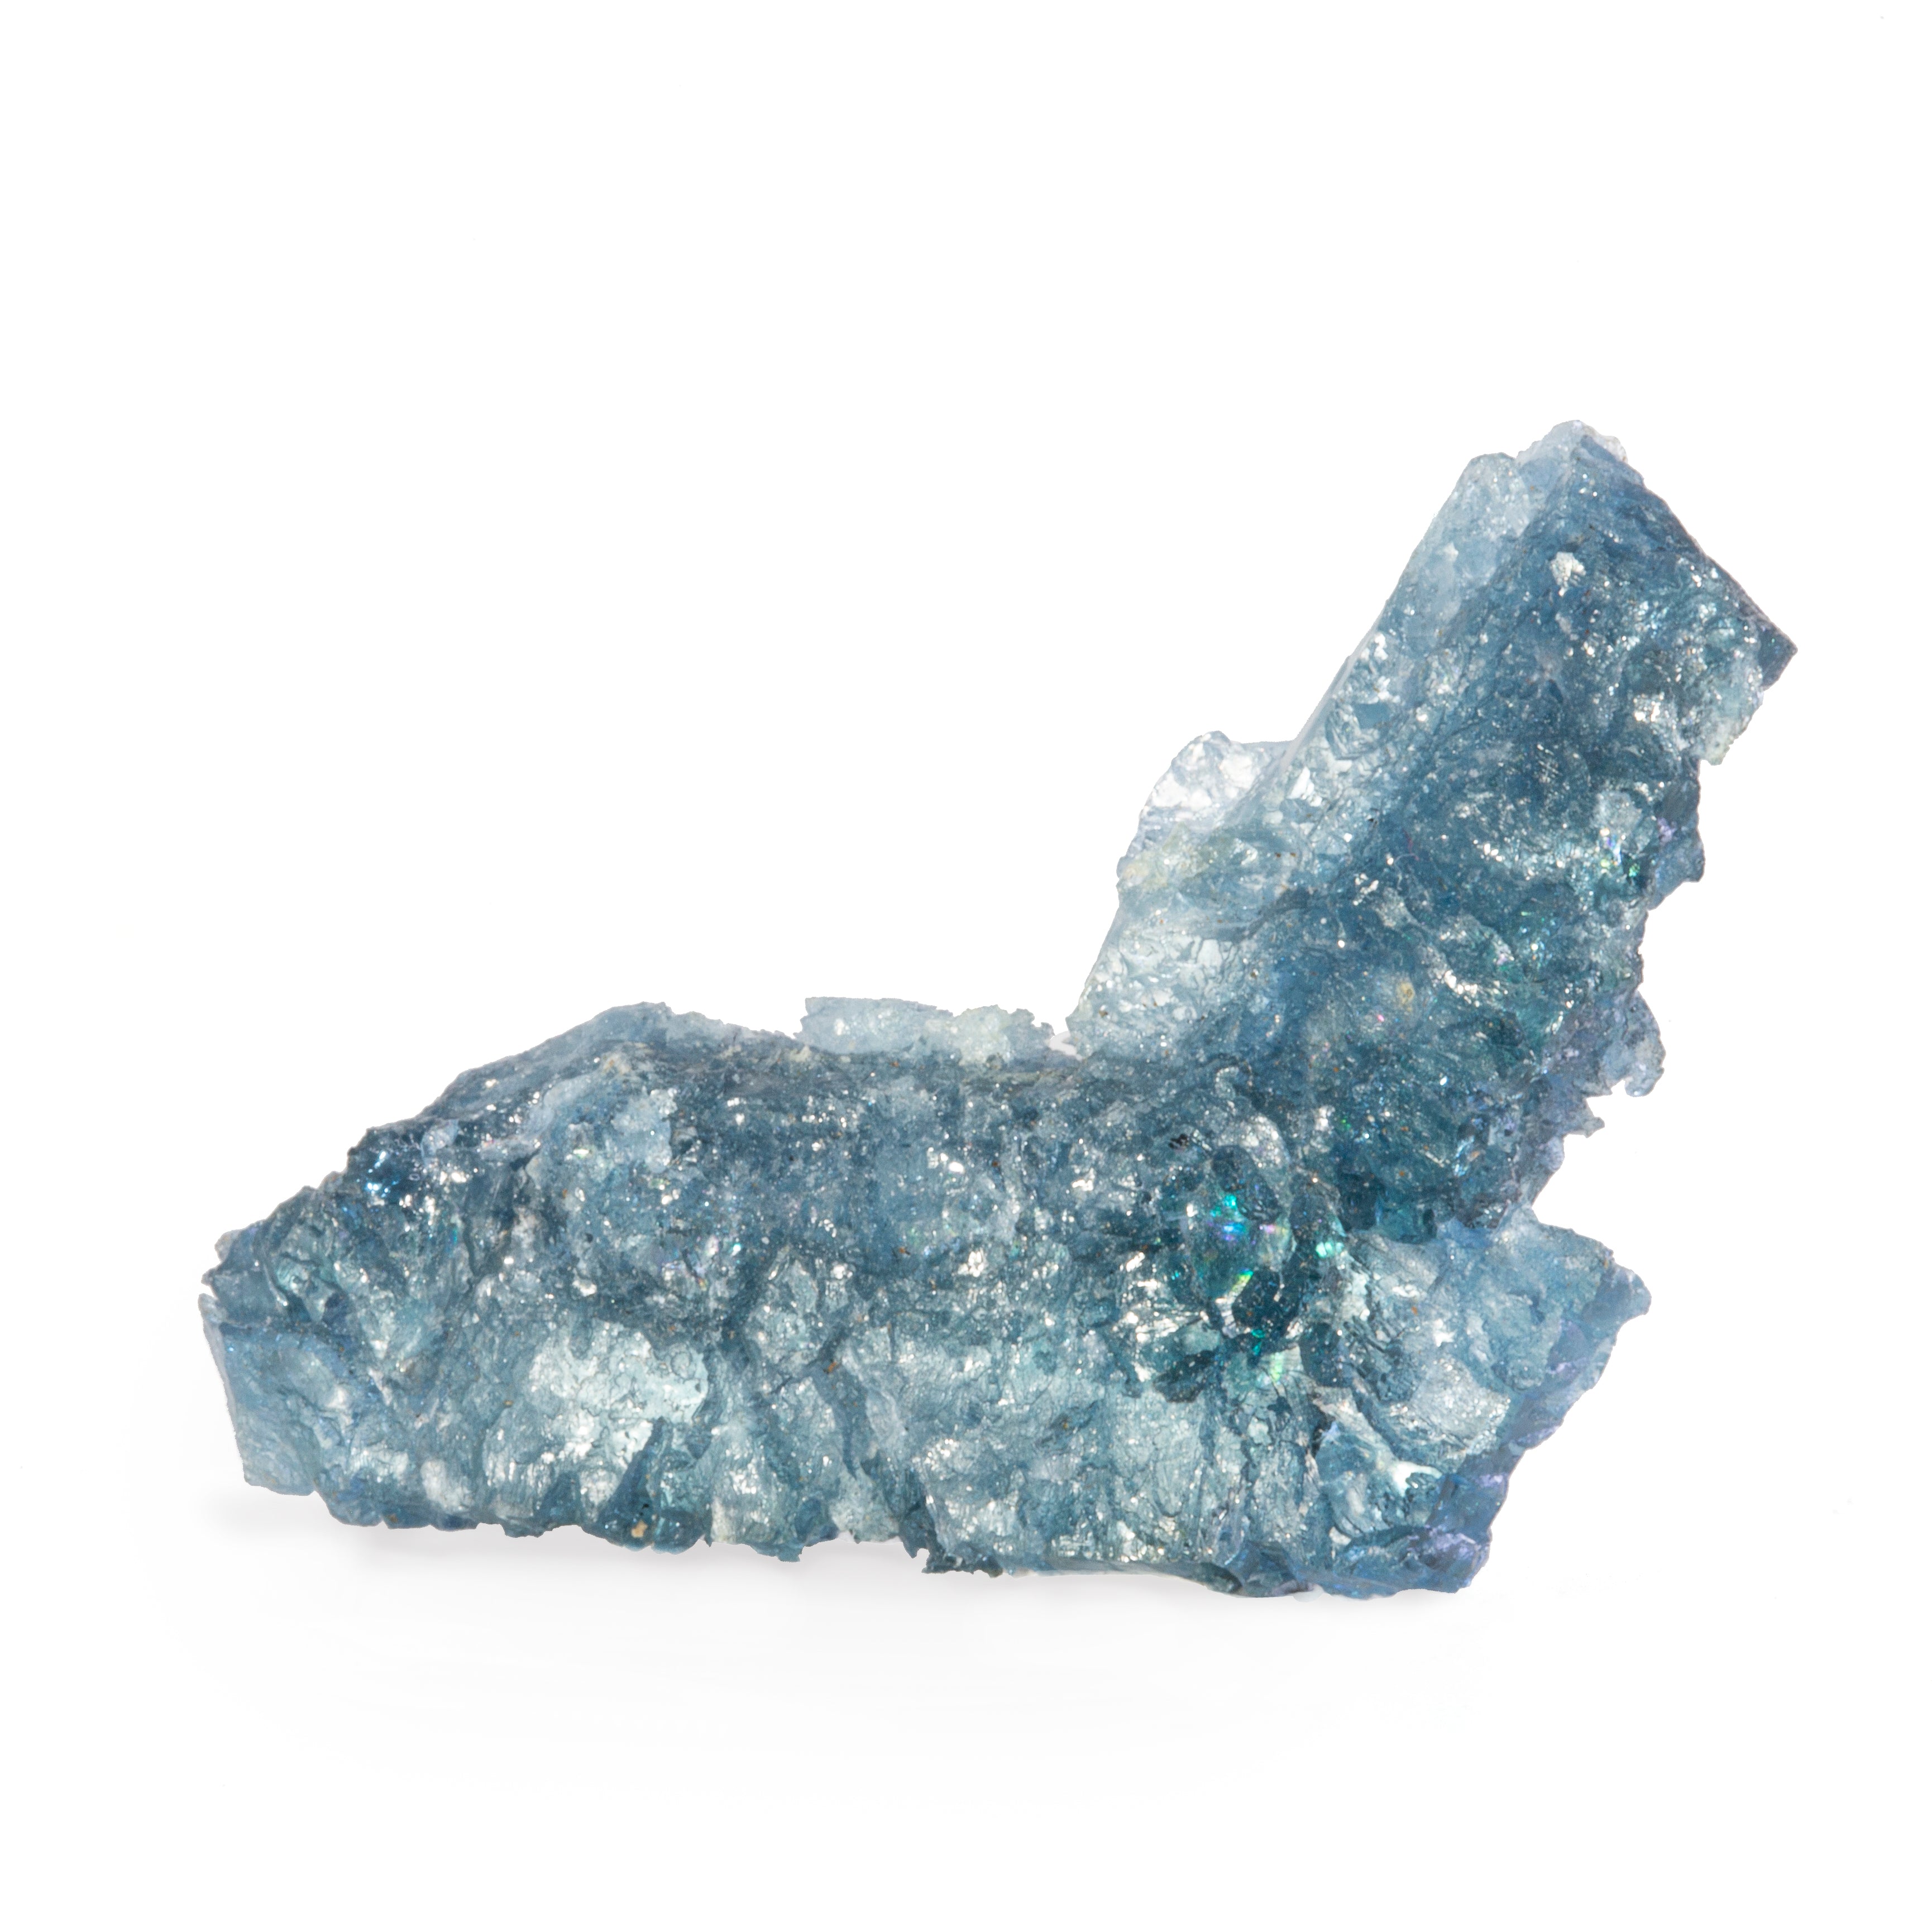 Blue Beryl- Rare Cesium Rich 34 carat Blue Beryl Etched Natural Crystal - Afghanistan - JJX-168 - Crystalarium